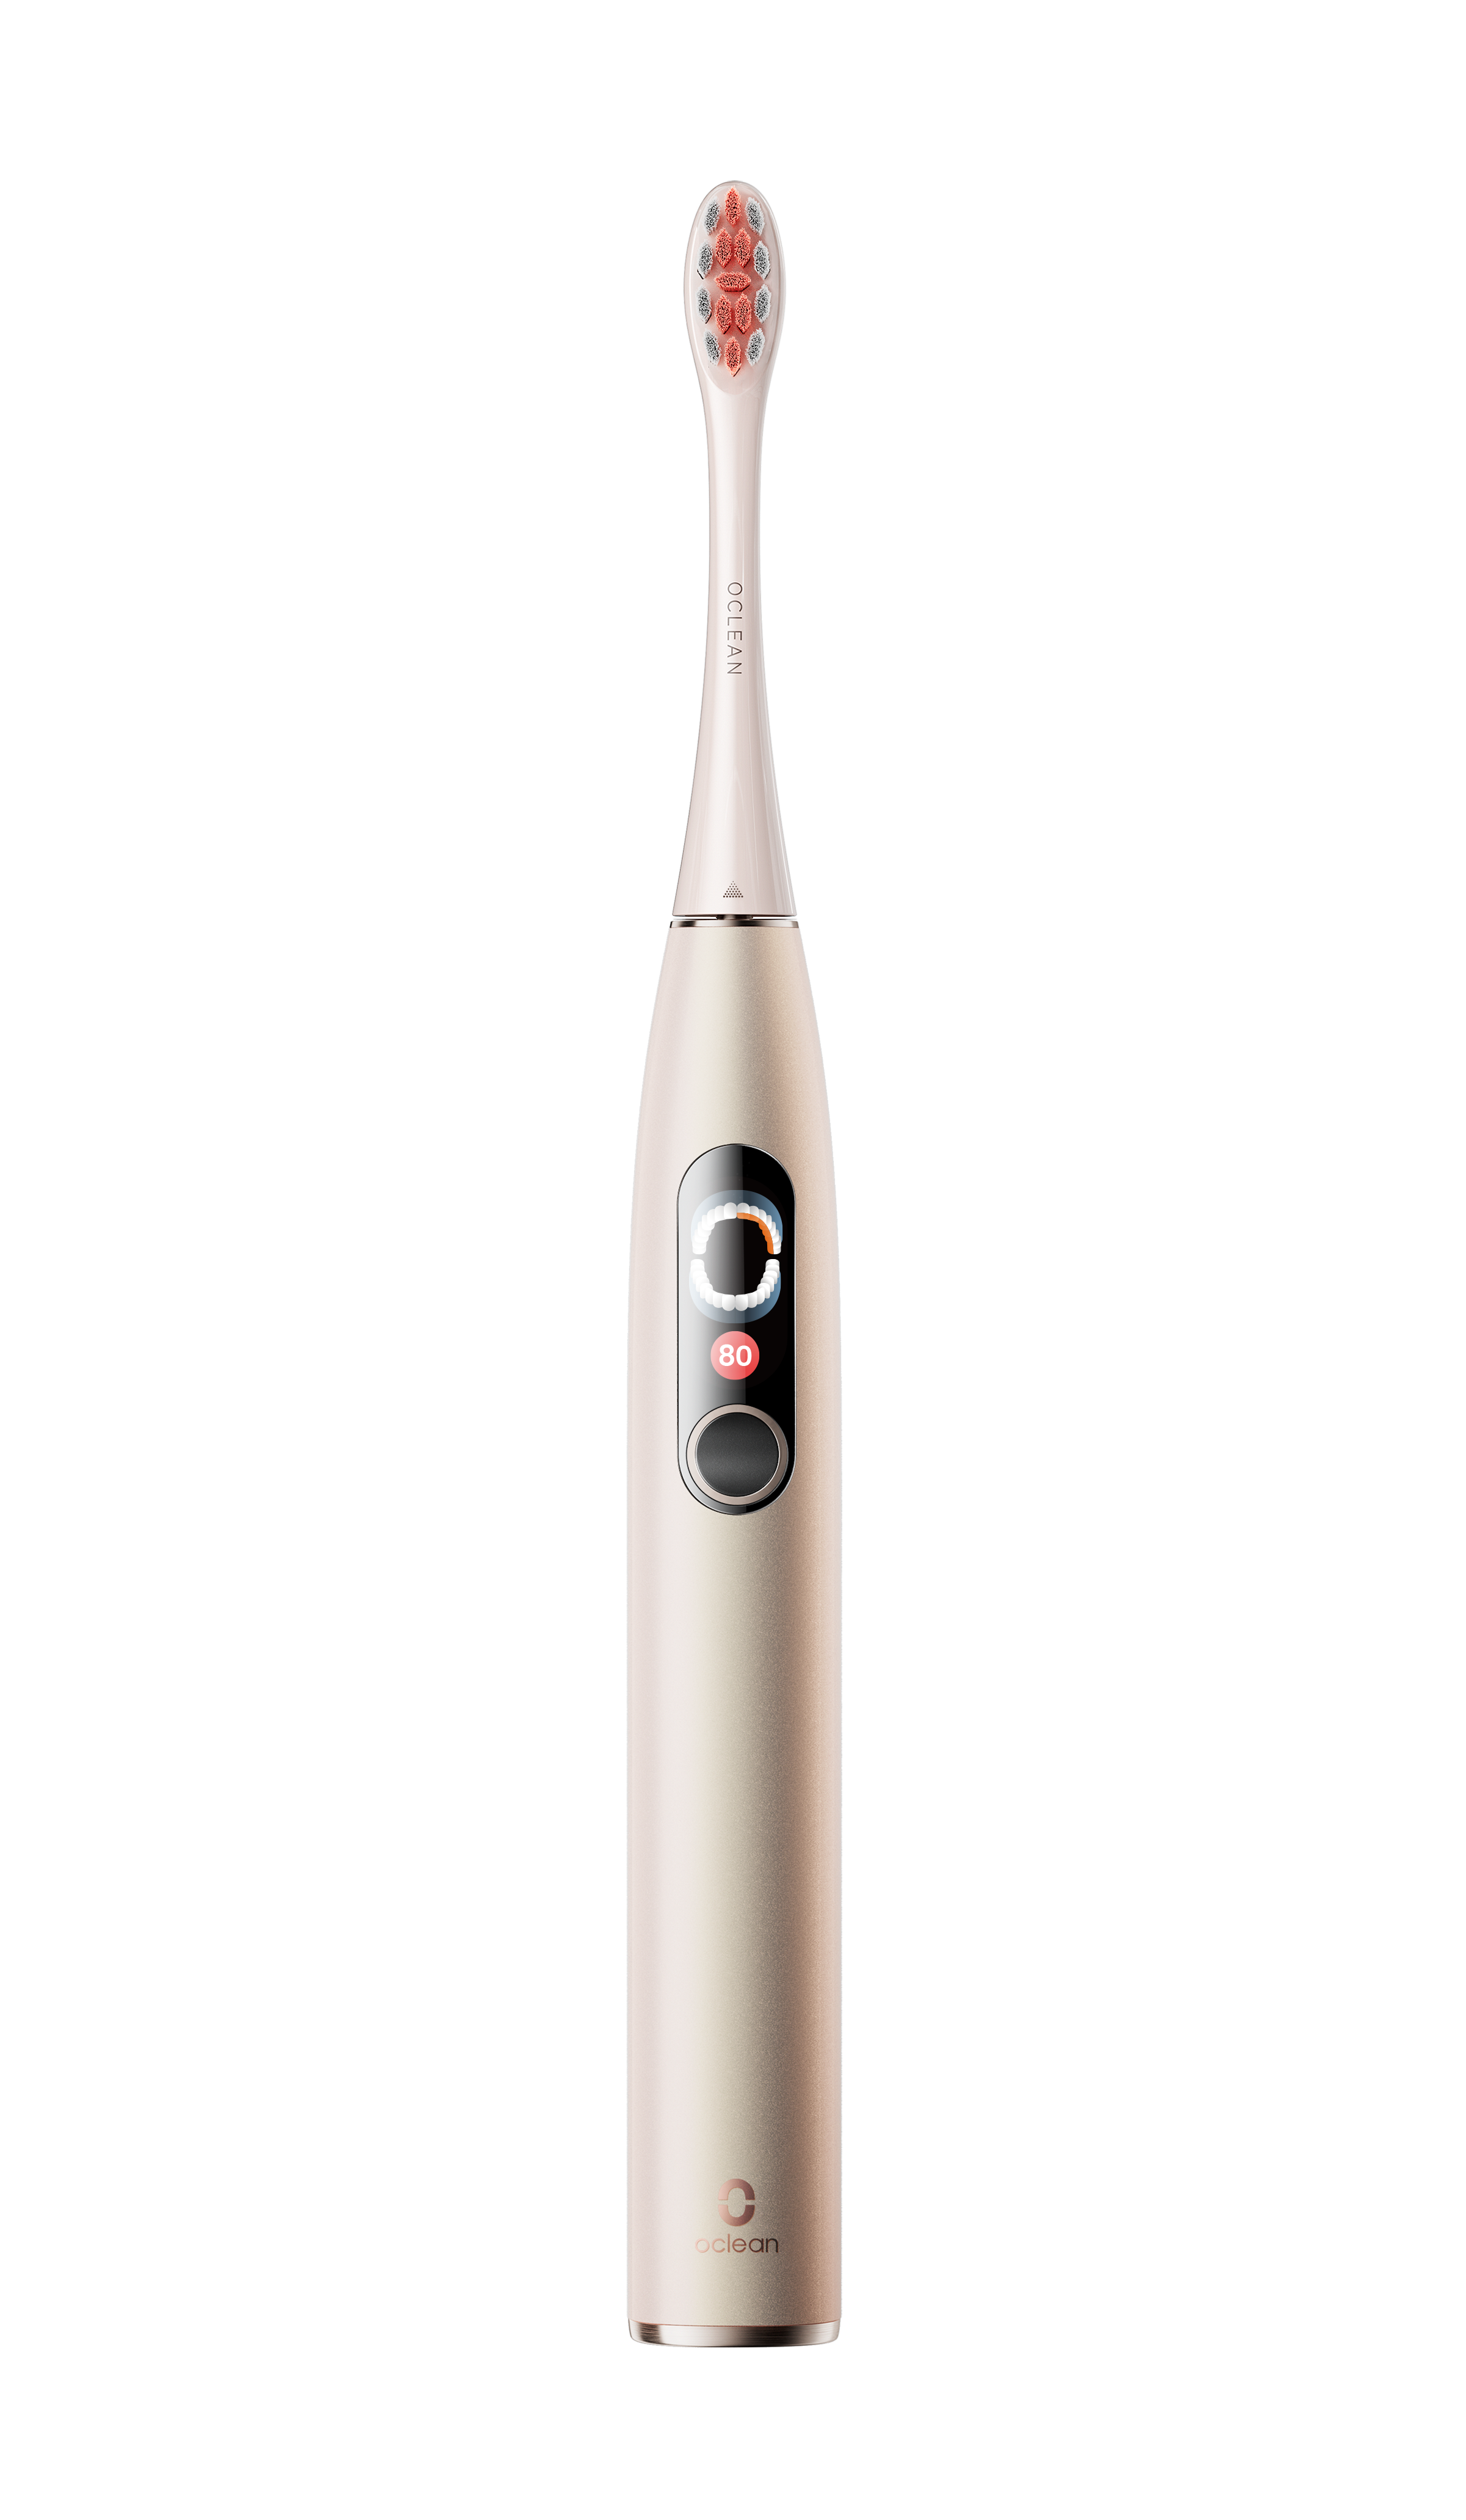 Oclean X Pro Digital Smart Toothbrush